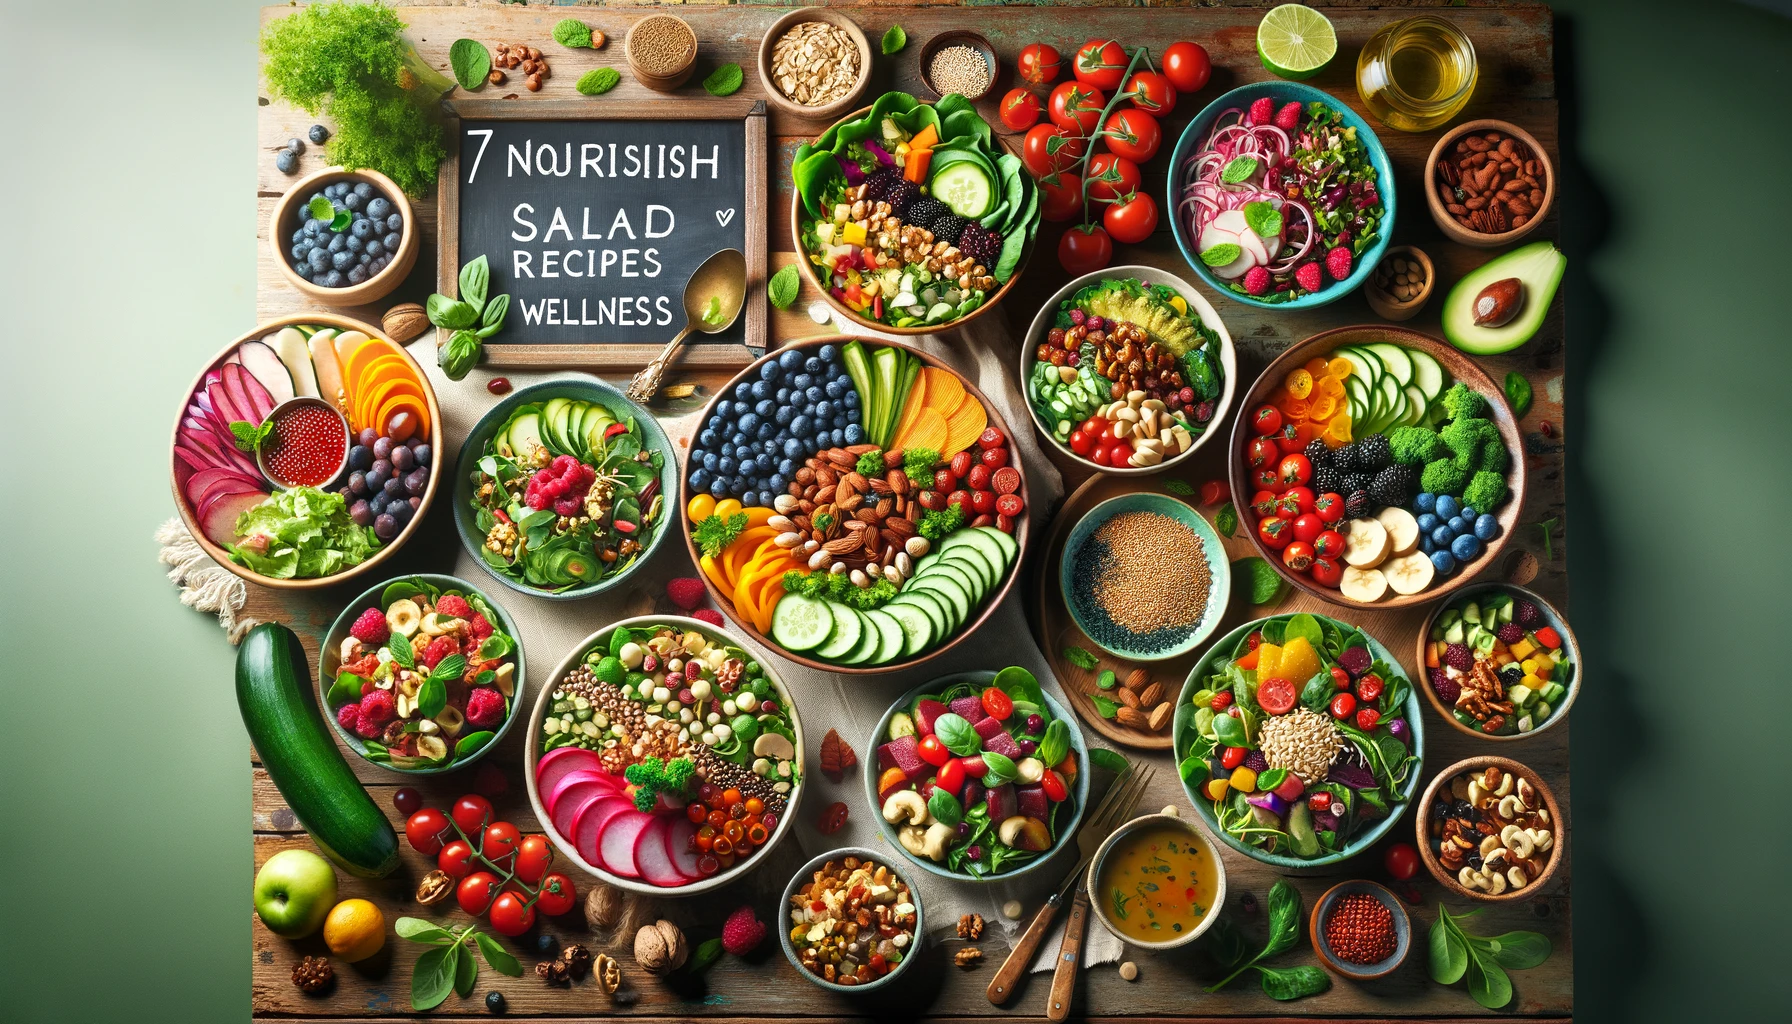 7 Nourishing Salad Recipes for Wellness